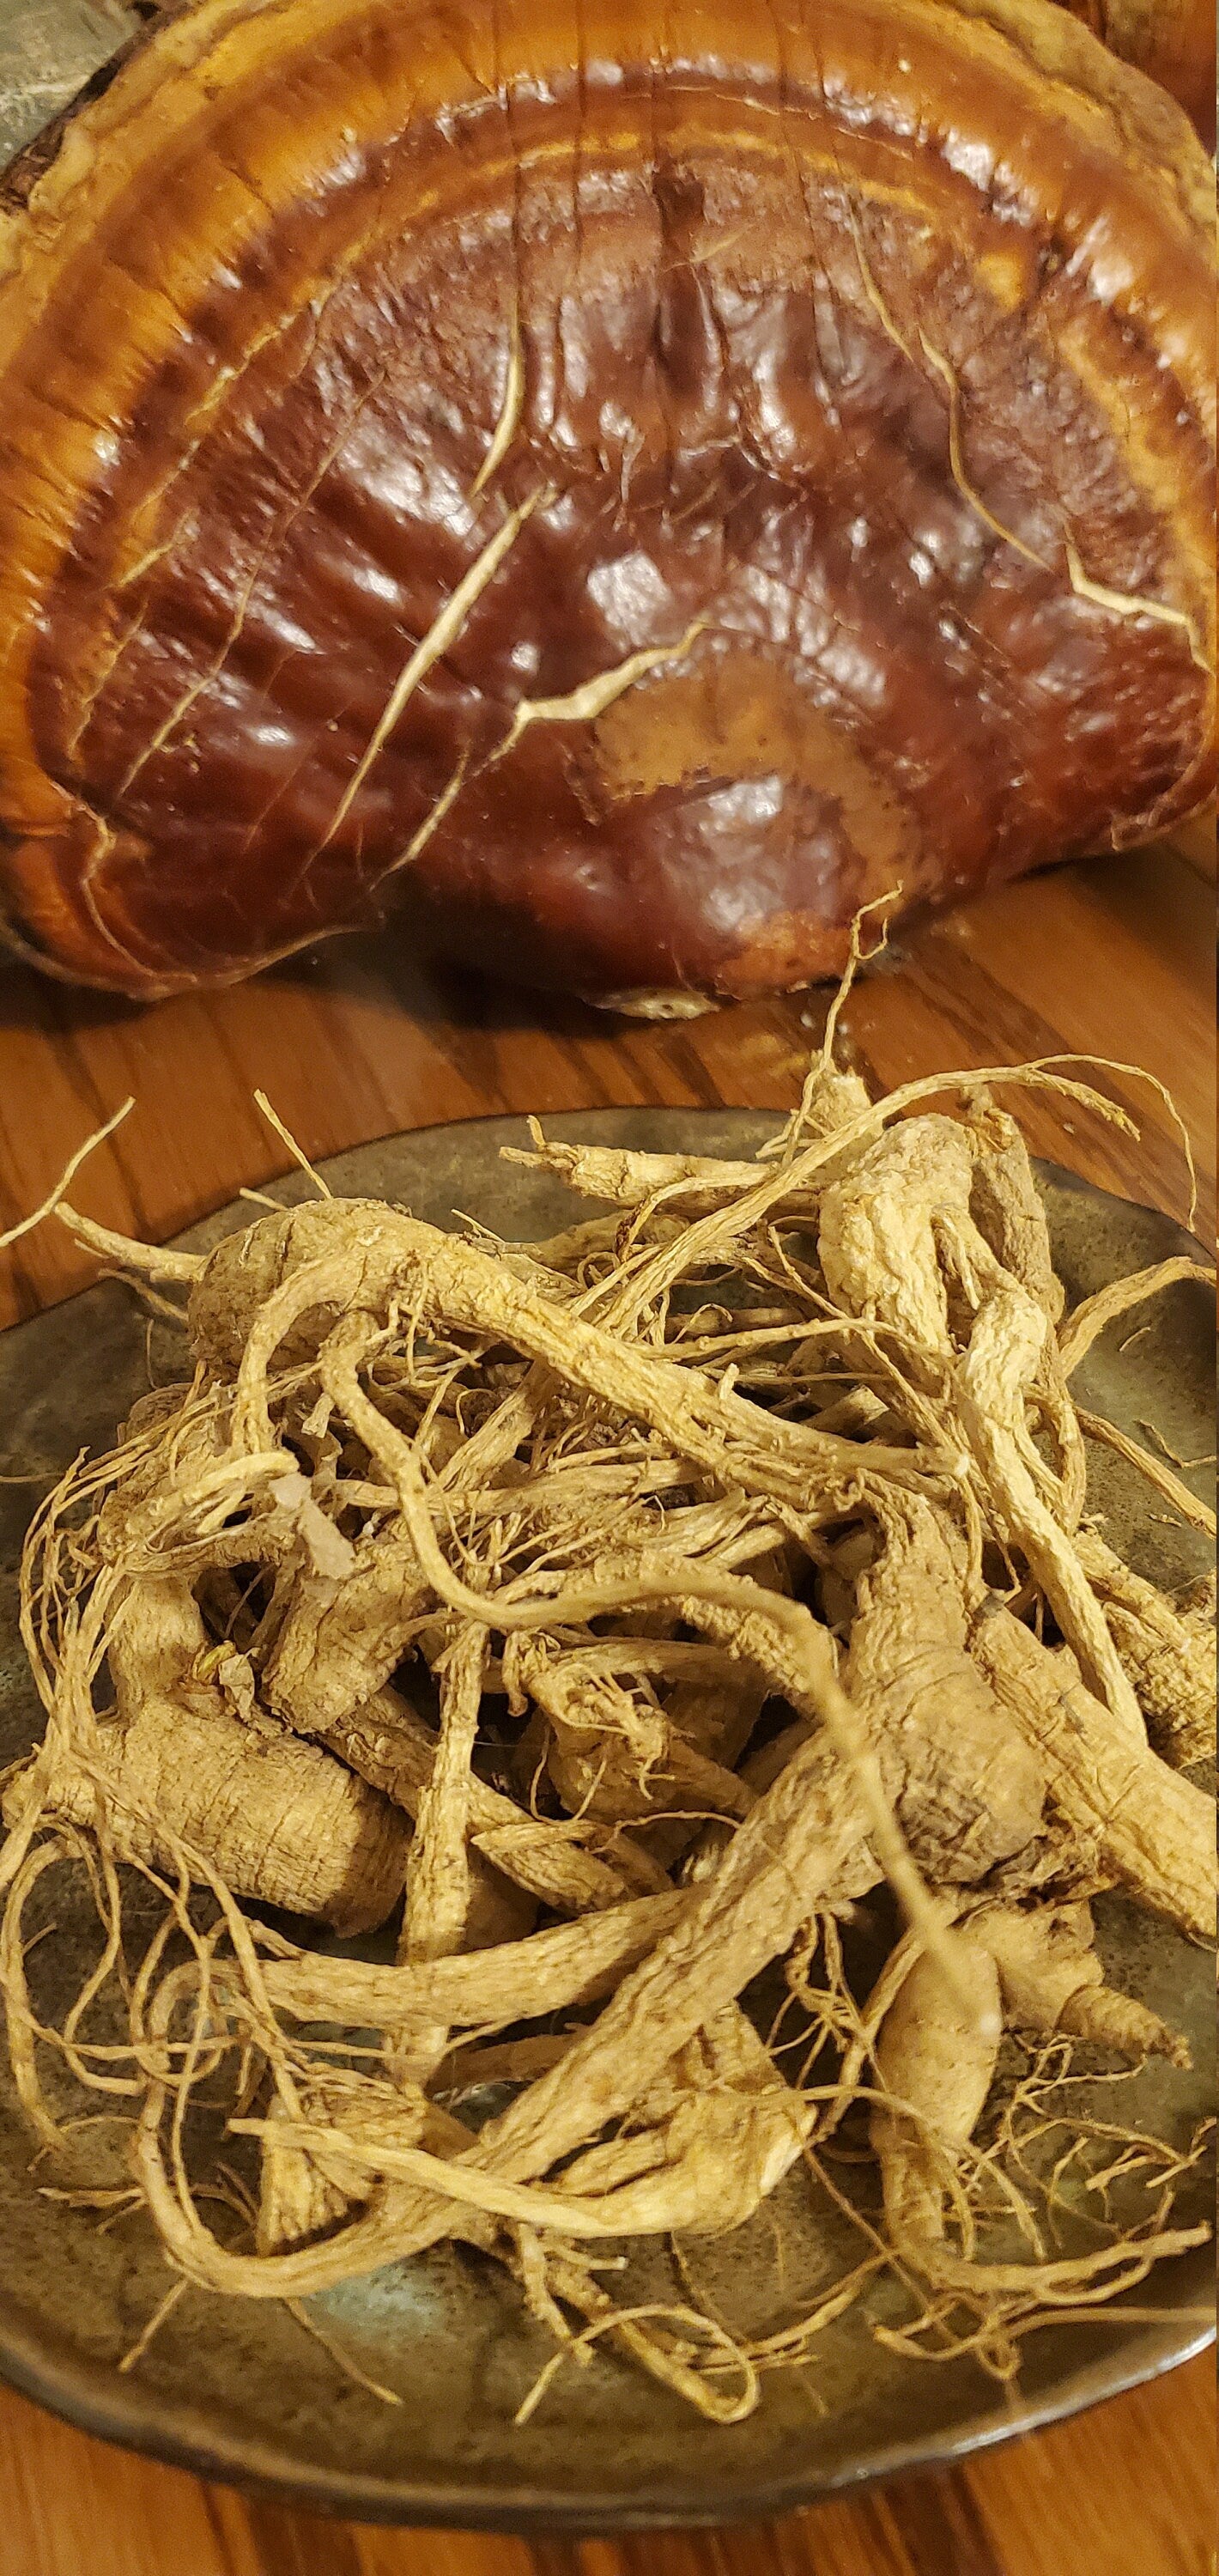 American Ginseng (Panax quinquefolius) - Dried Whole Root